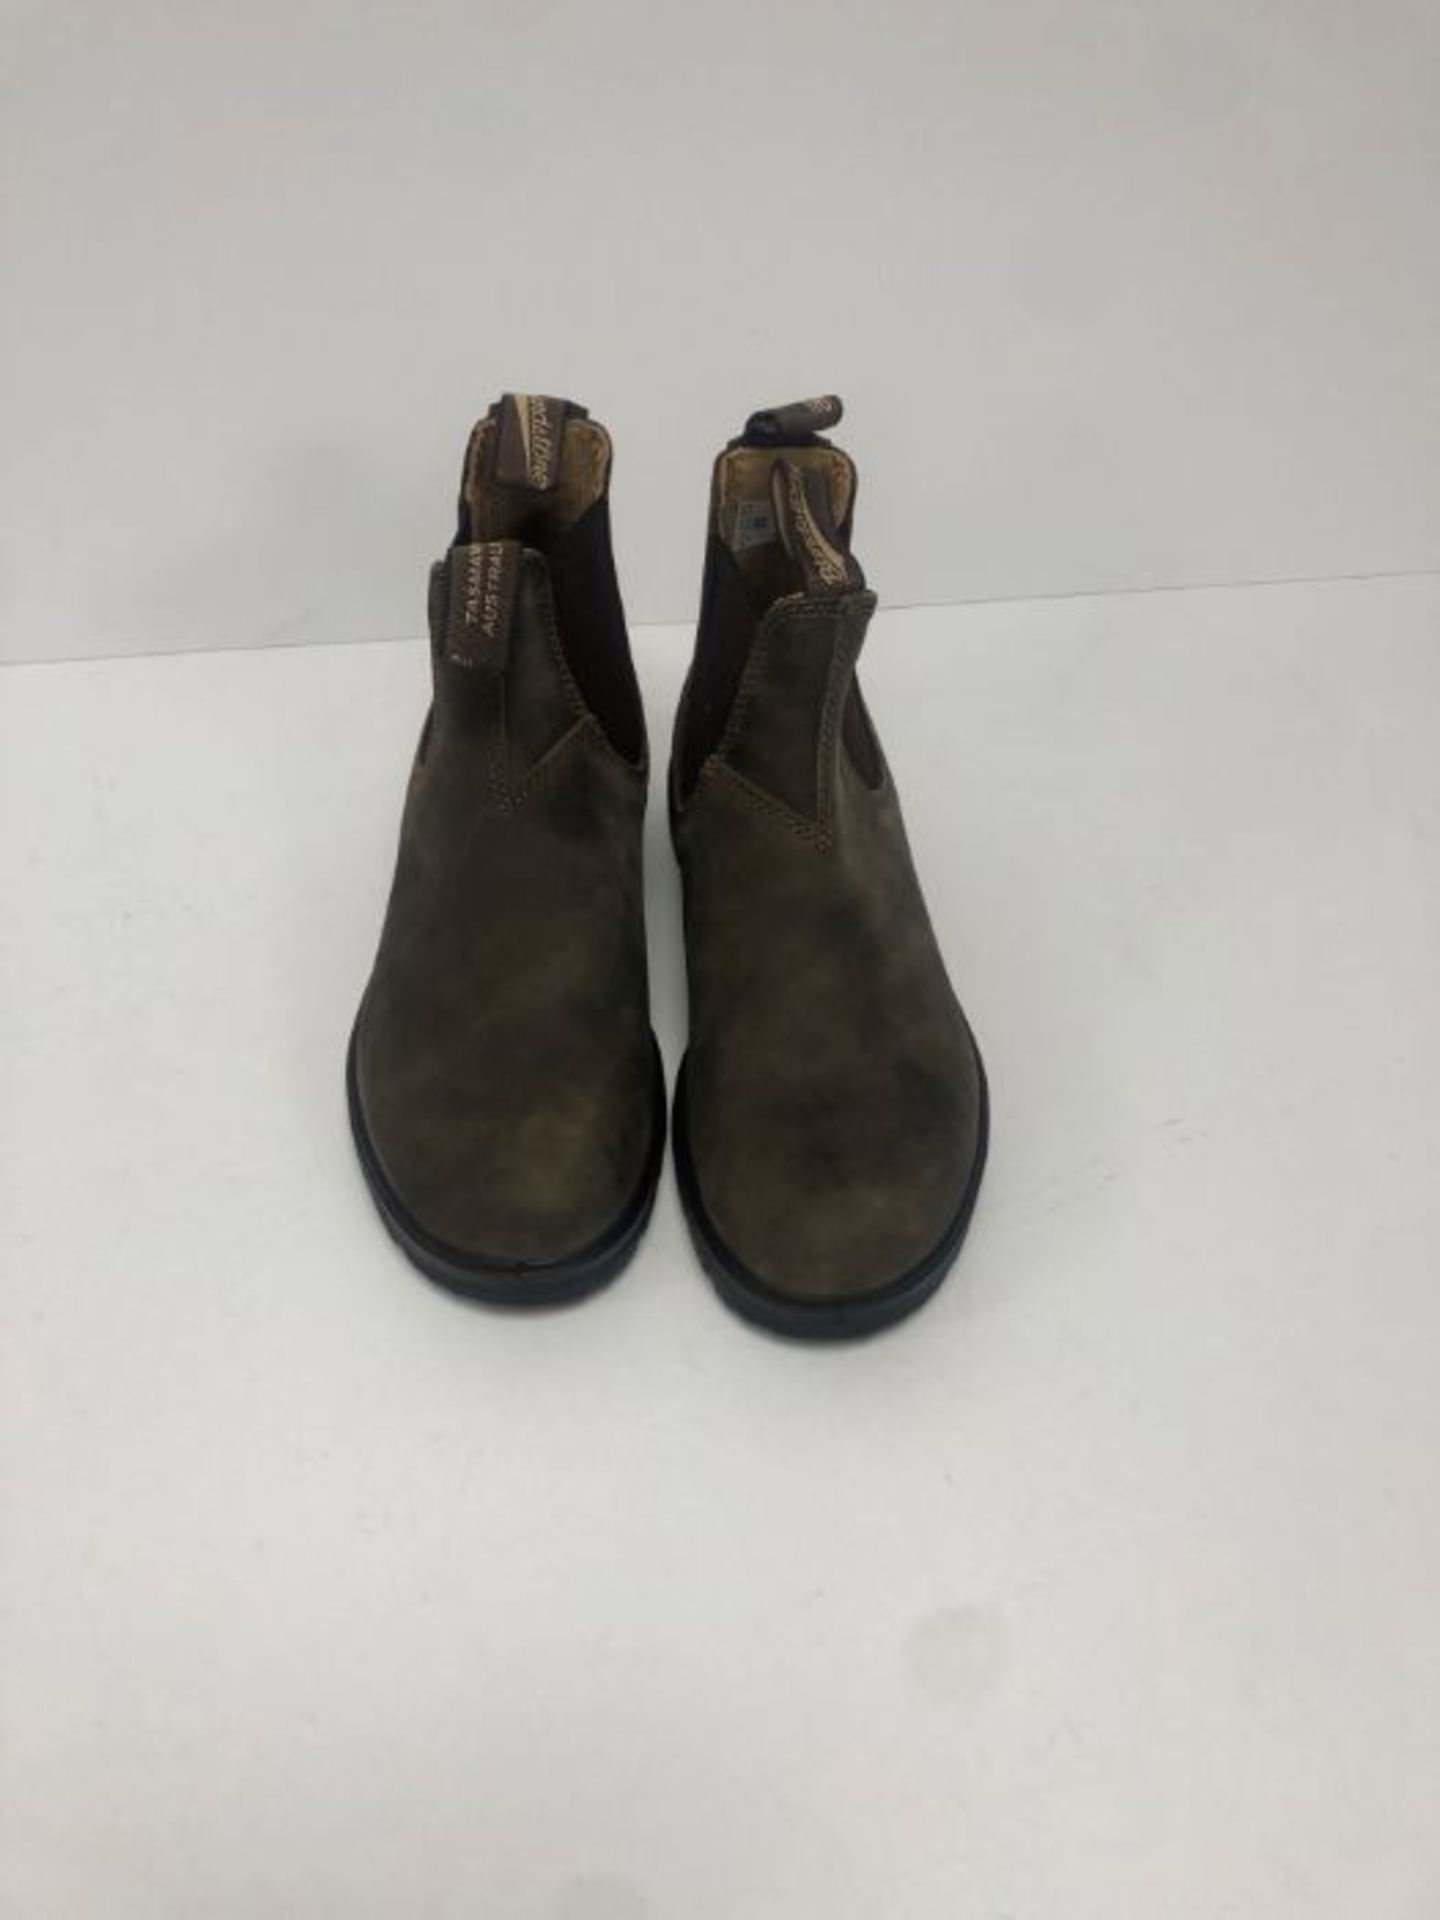 Blundstone Women's Chelsea Boots, Rustic Brown, UK 5.5 - Image 2 of 2